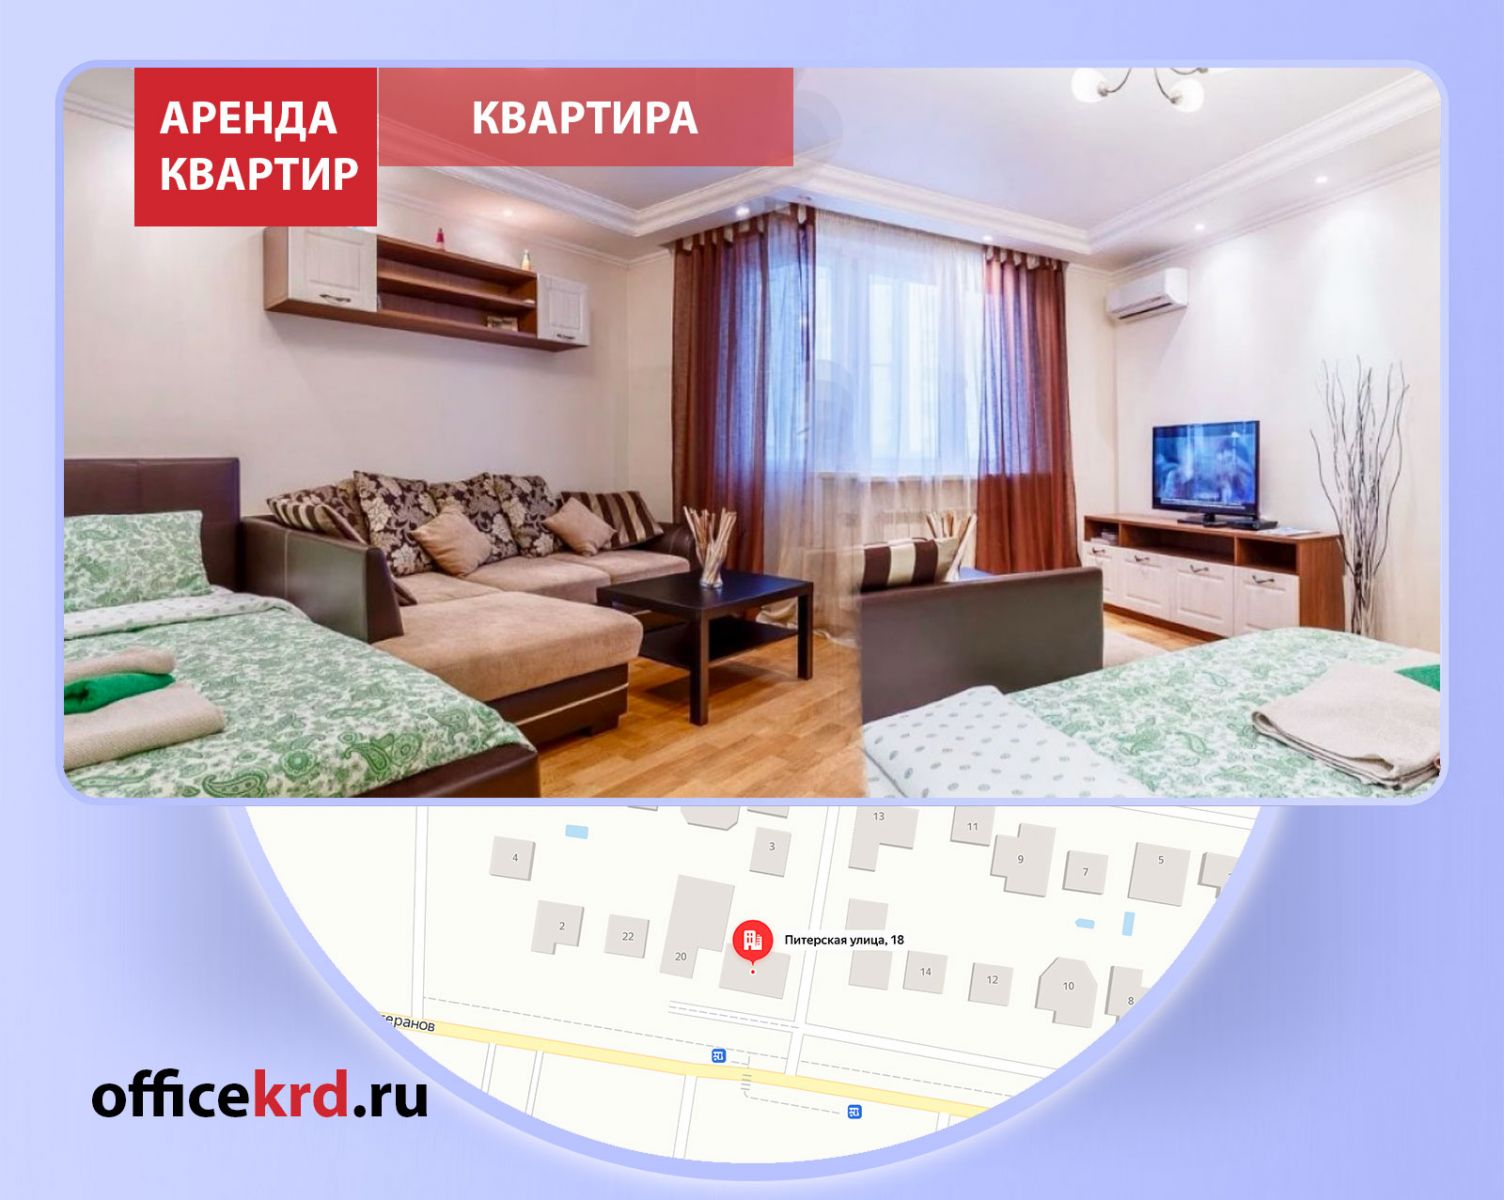 Дешевая квартира от собственника, аренда посуточно двухкомнатной квартиры, арендовать квартиру Краснодар